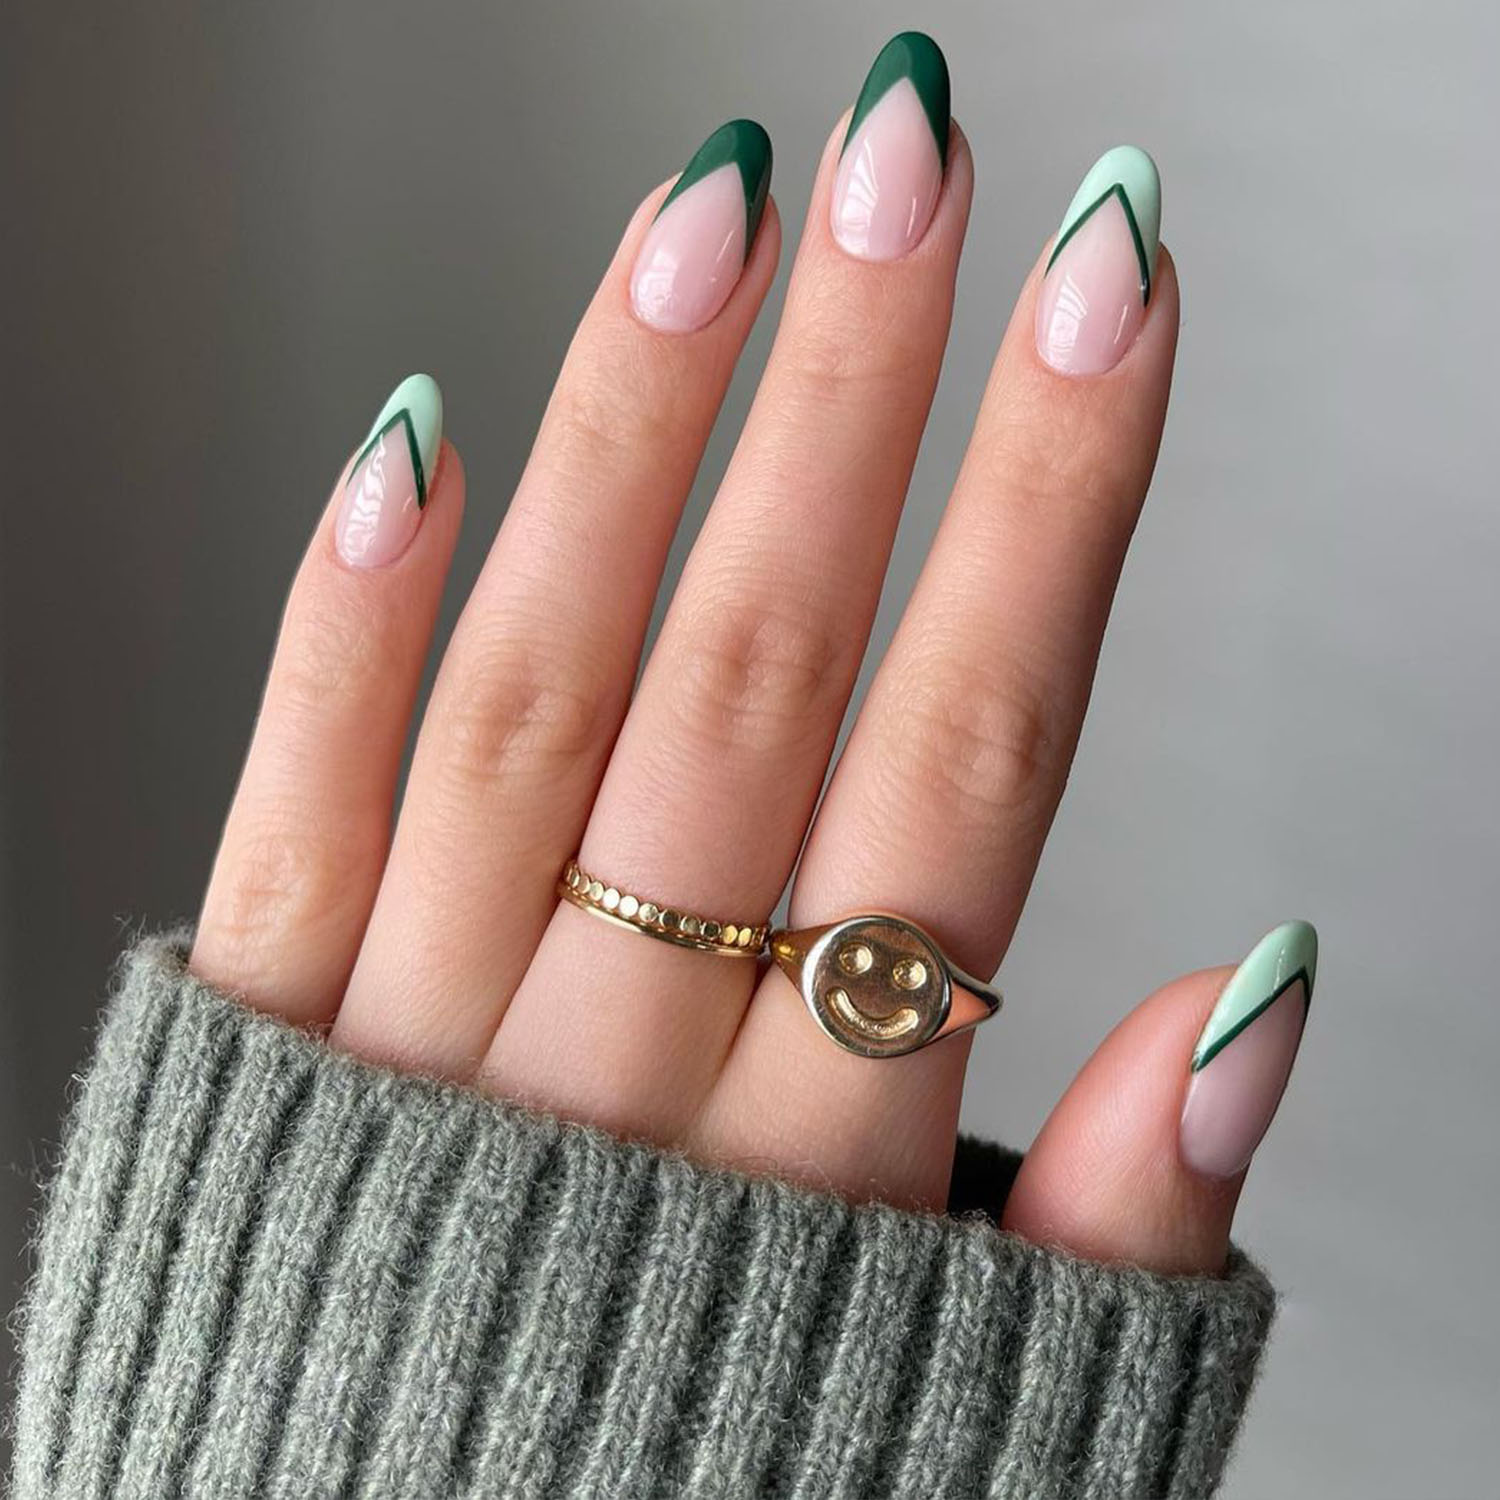 Manucure des ongles avec vernis vert